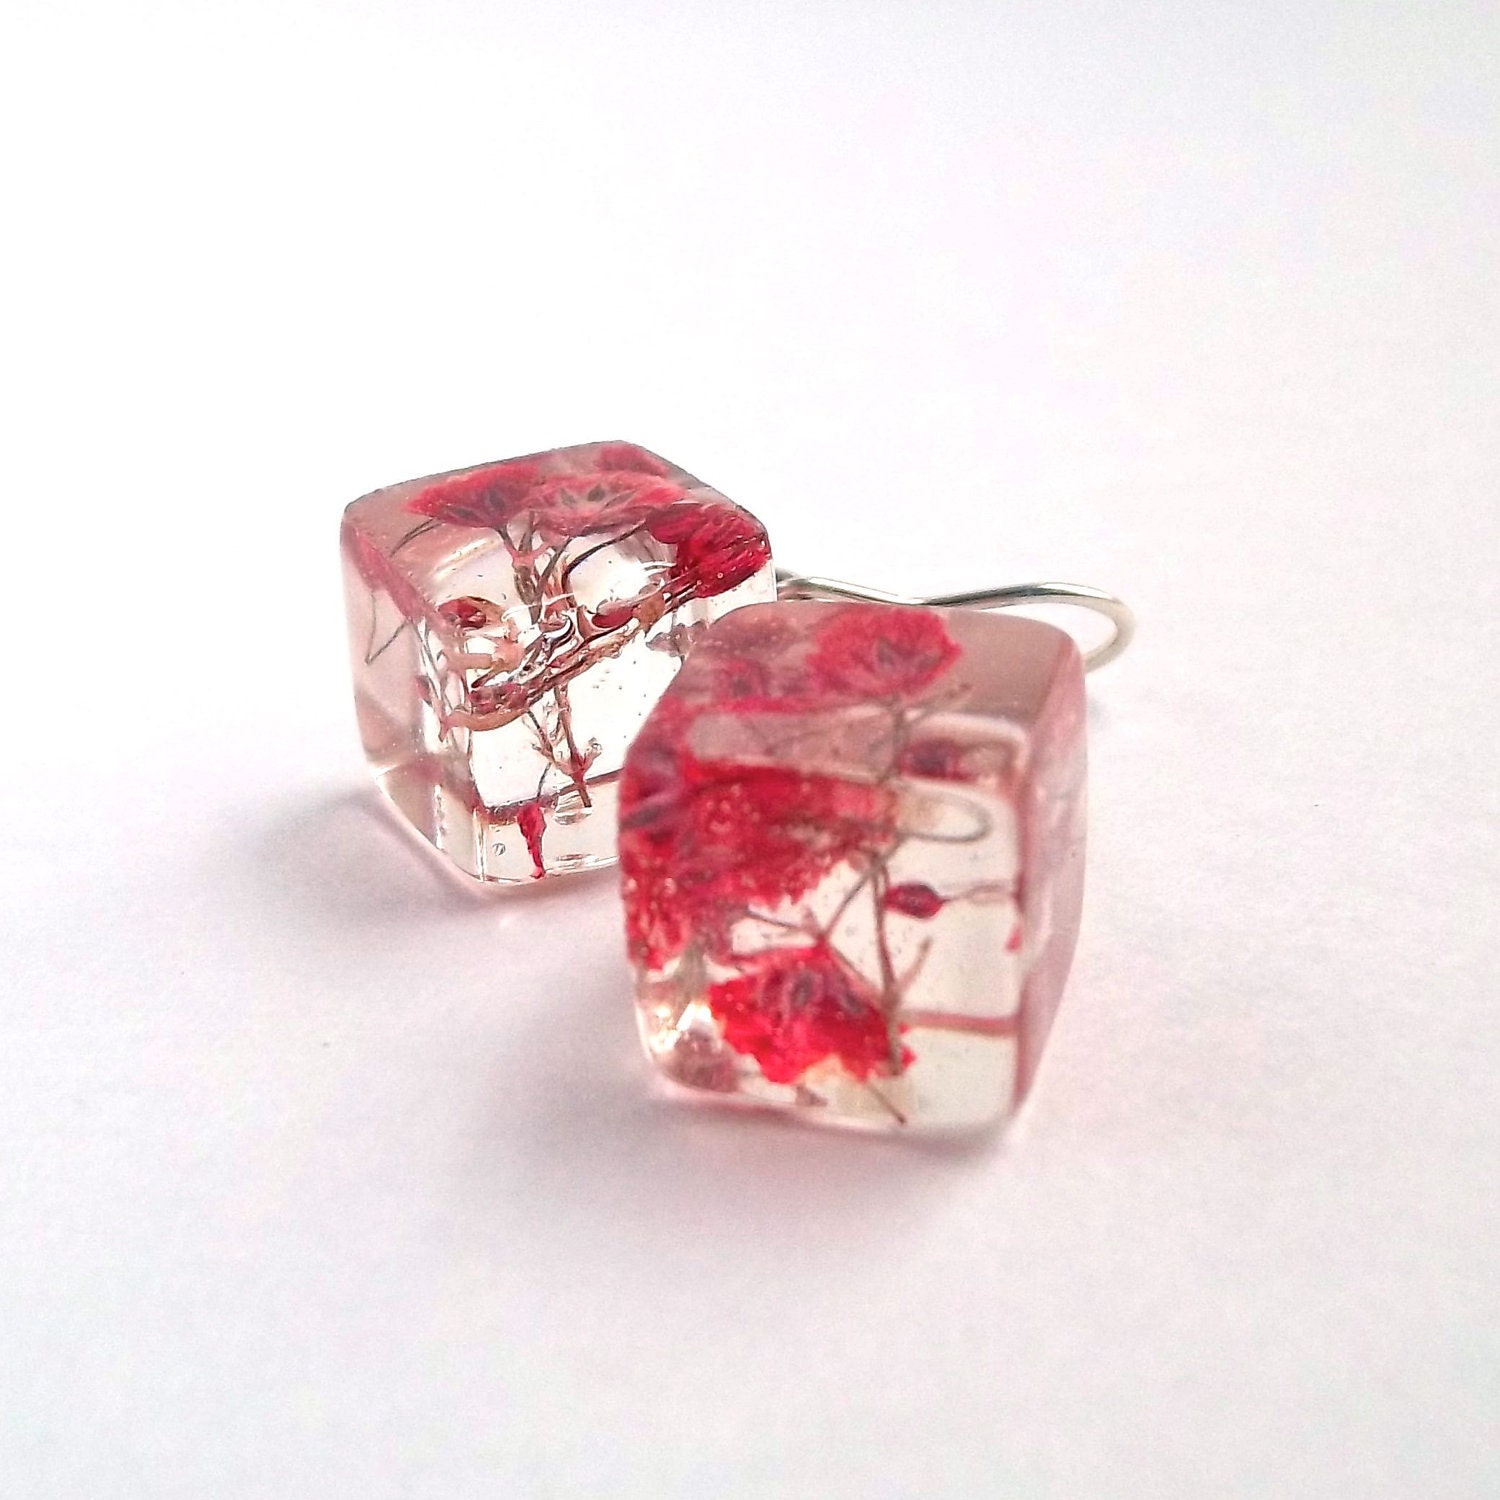 Red Resin Earrings. Floral Earrings. Pressed Flower Earrings.  Handmade Jewelry with Real Flowers - Red Baby's Breath